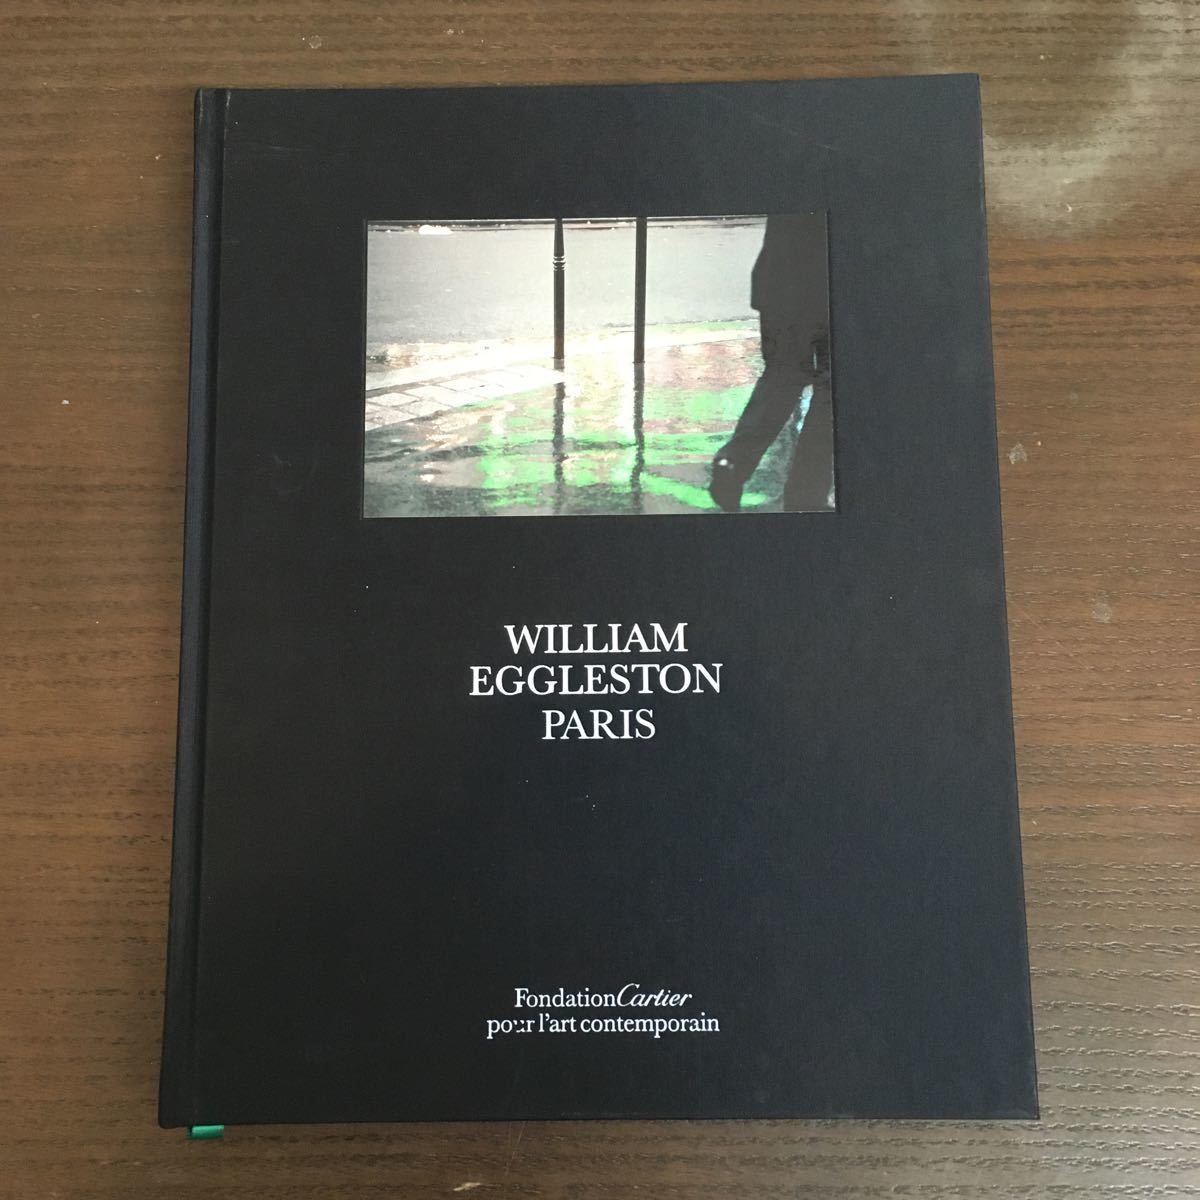 WILLIAM EGGLESTON PARIS ウィリアム・エグルストン 写真集 【3K】 ach48stKOyGUVXY1-31593 アート写真